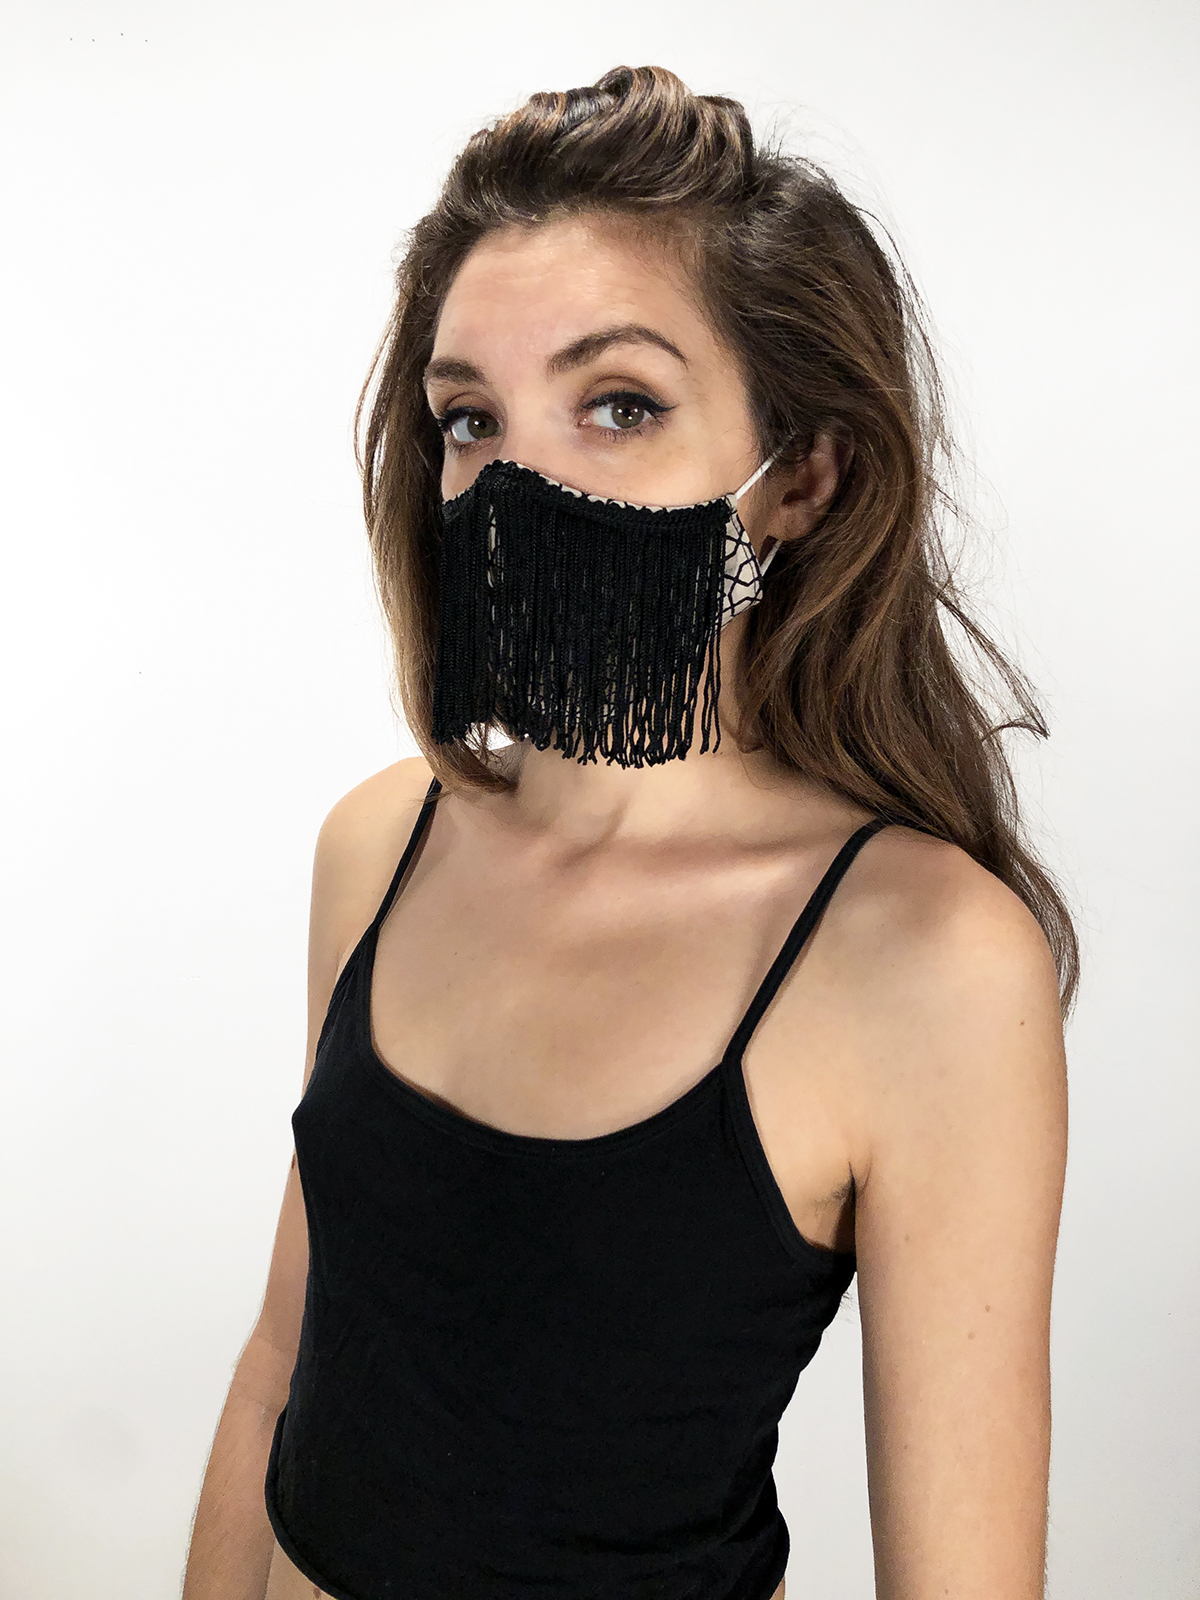 Face covering mask with Black fringe o female model